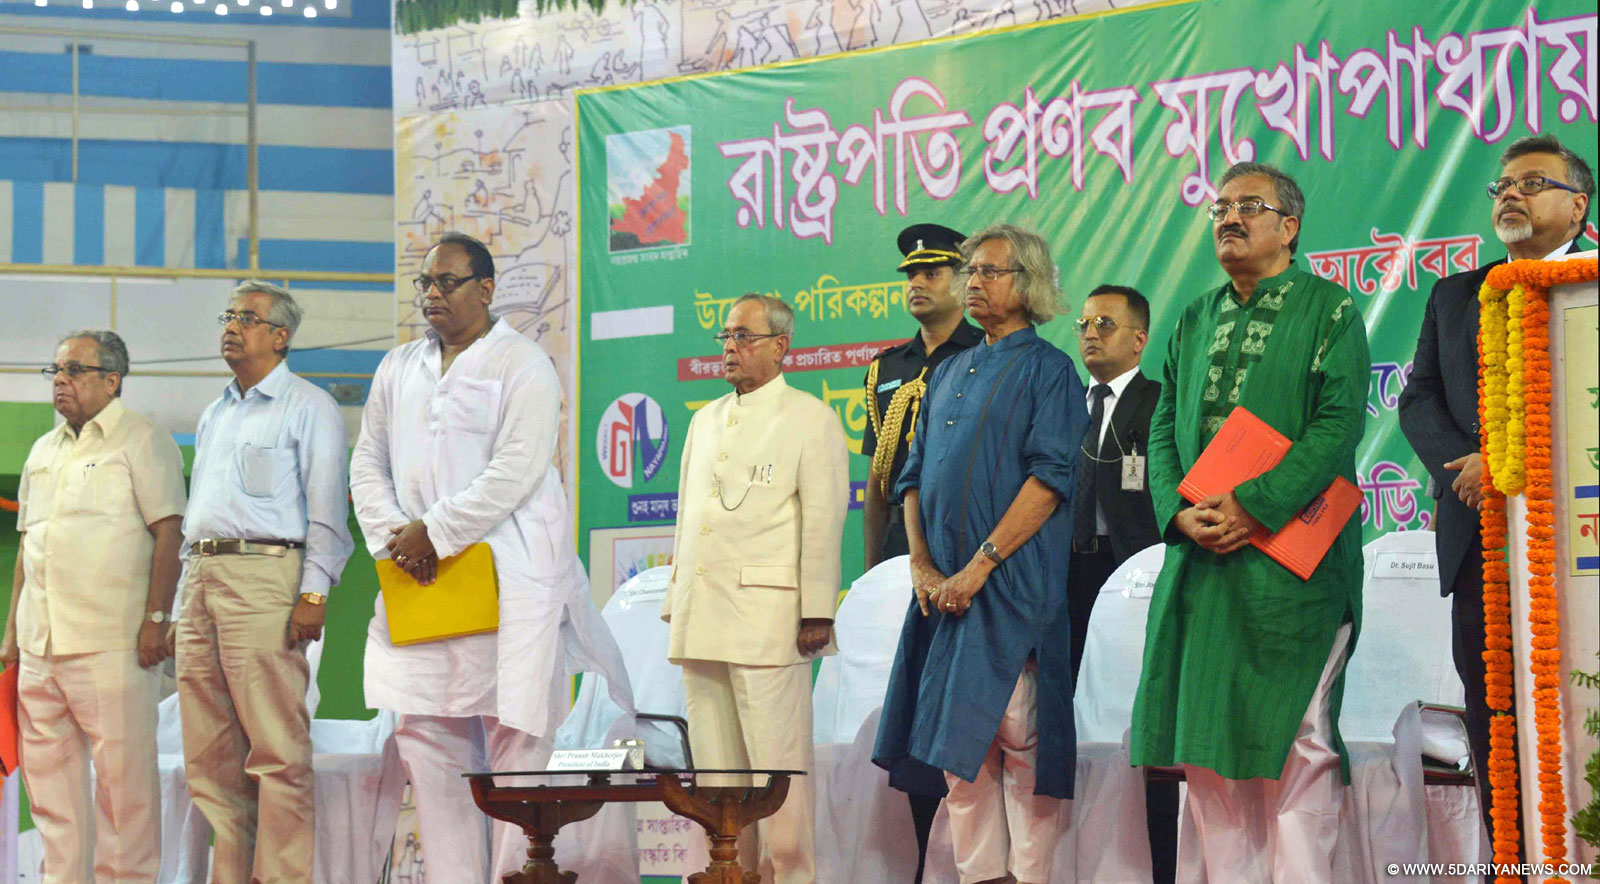 The President, Shri Pranab Mukherjee attending the felicitation function, organized by Nayaprajanma, a local weekly newspaper and Suri Sabujer Abhijan, a cultural organization at Birbhum Indoor Stadium, in West Bengal on October 19, 2015.